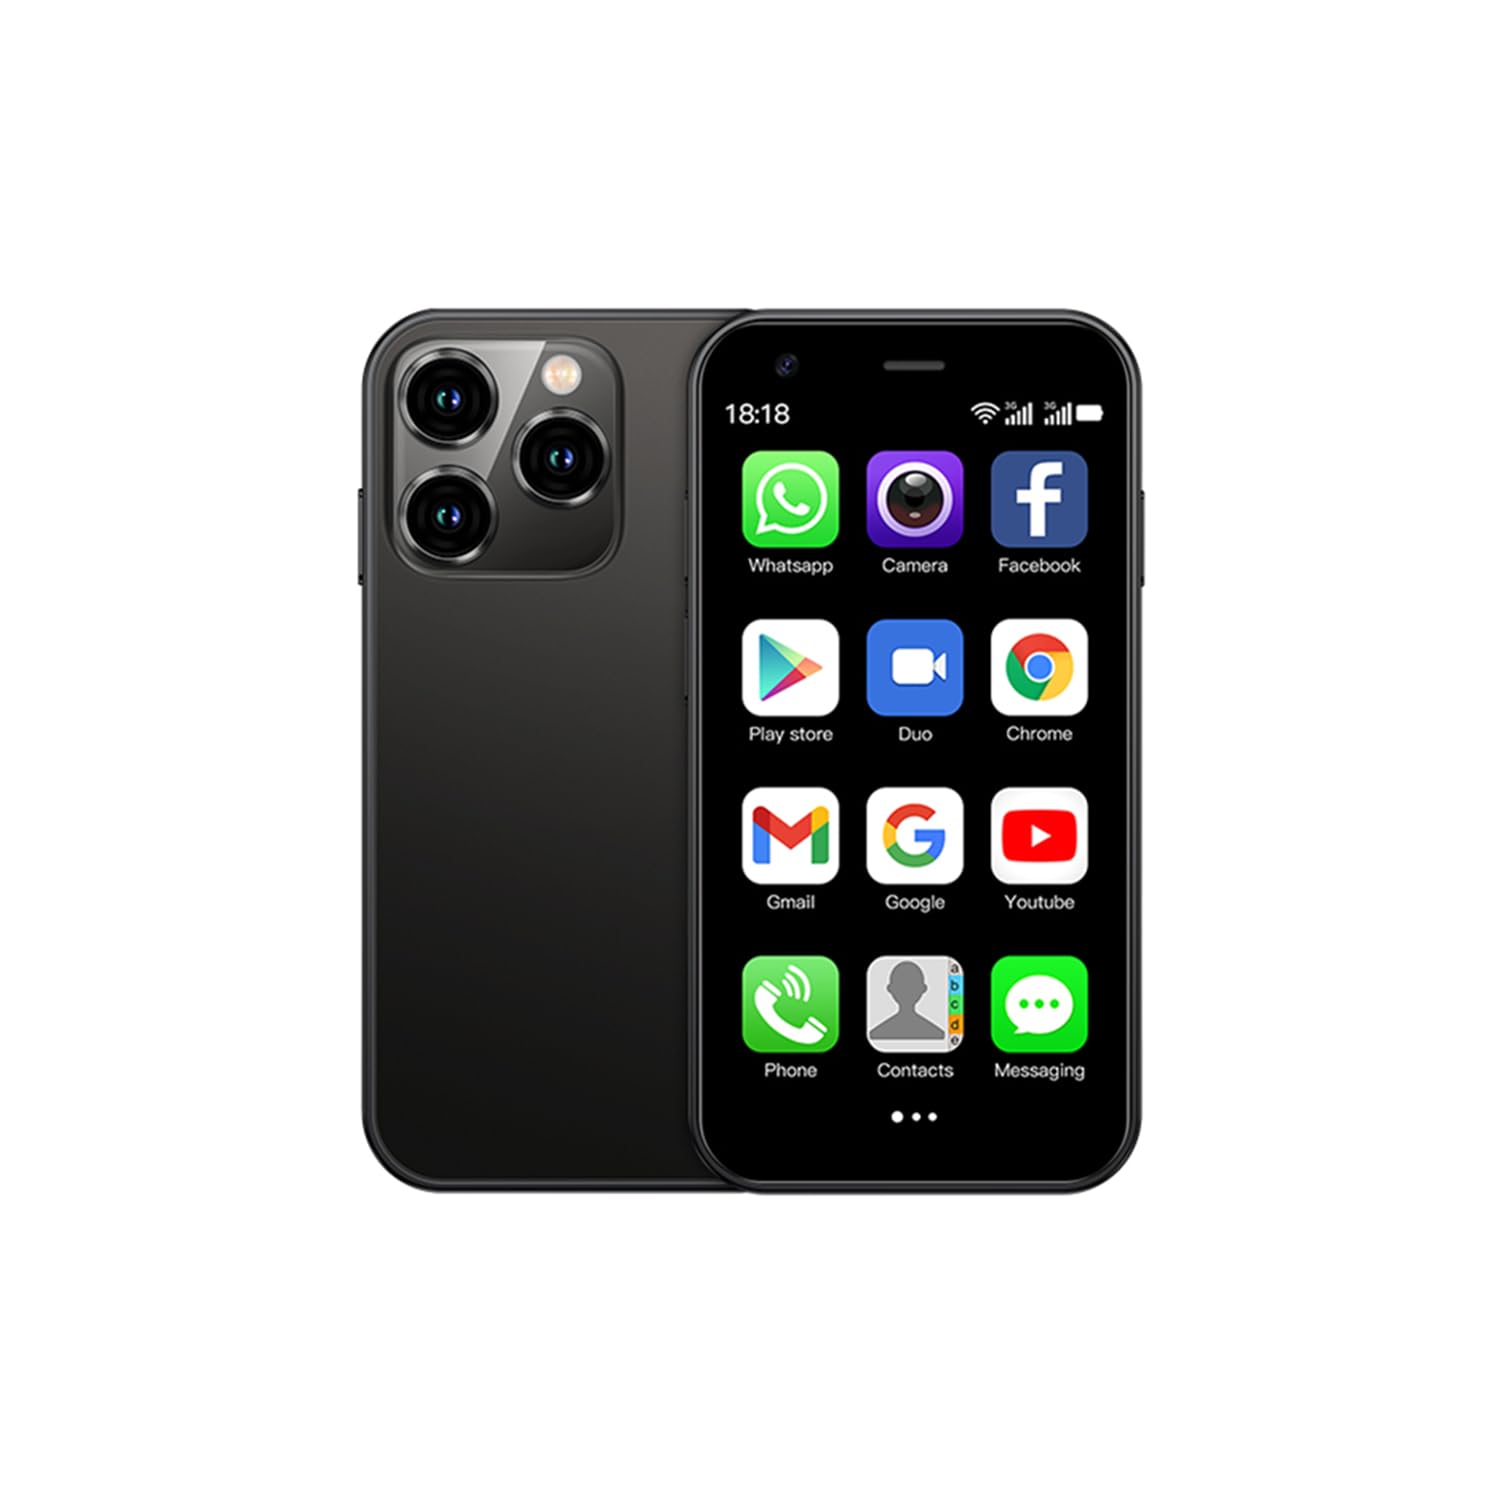 SOYES XS15 3G Mini Smartphone 3.0 Inch WiFi GPS Quad Core Android 8.1 Cell Phones Slim Body HD Camera Dual Sim Google Play Cute Palm Smartphone 2GB RAM 16GB ROM China Mobile (Black)